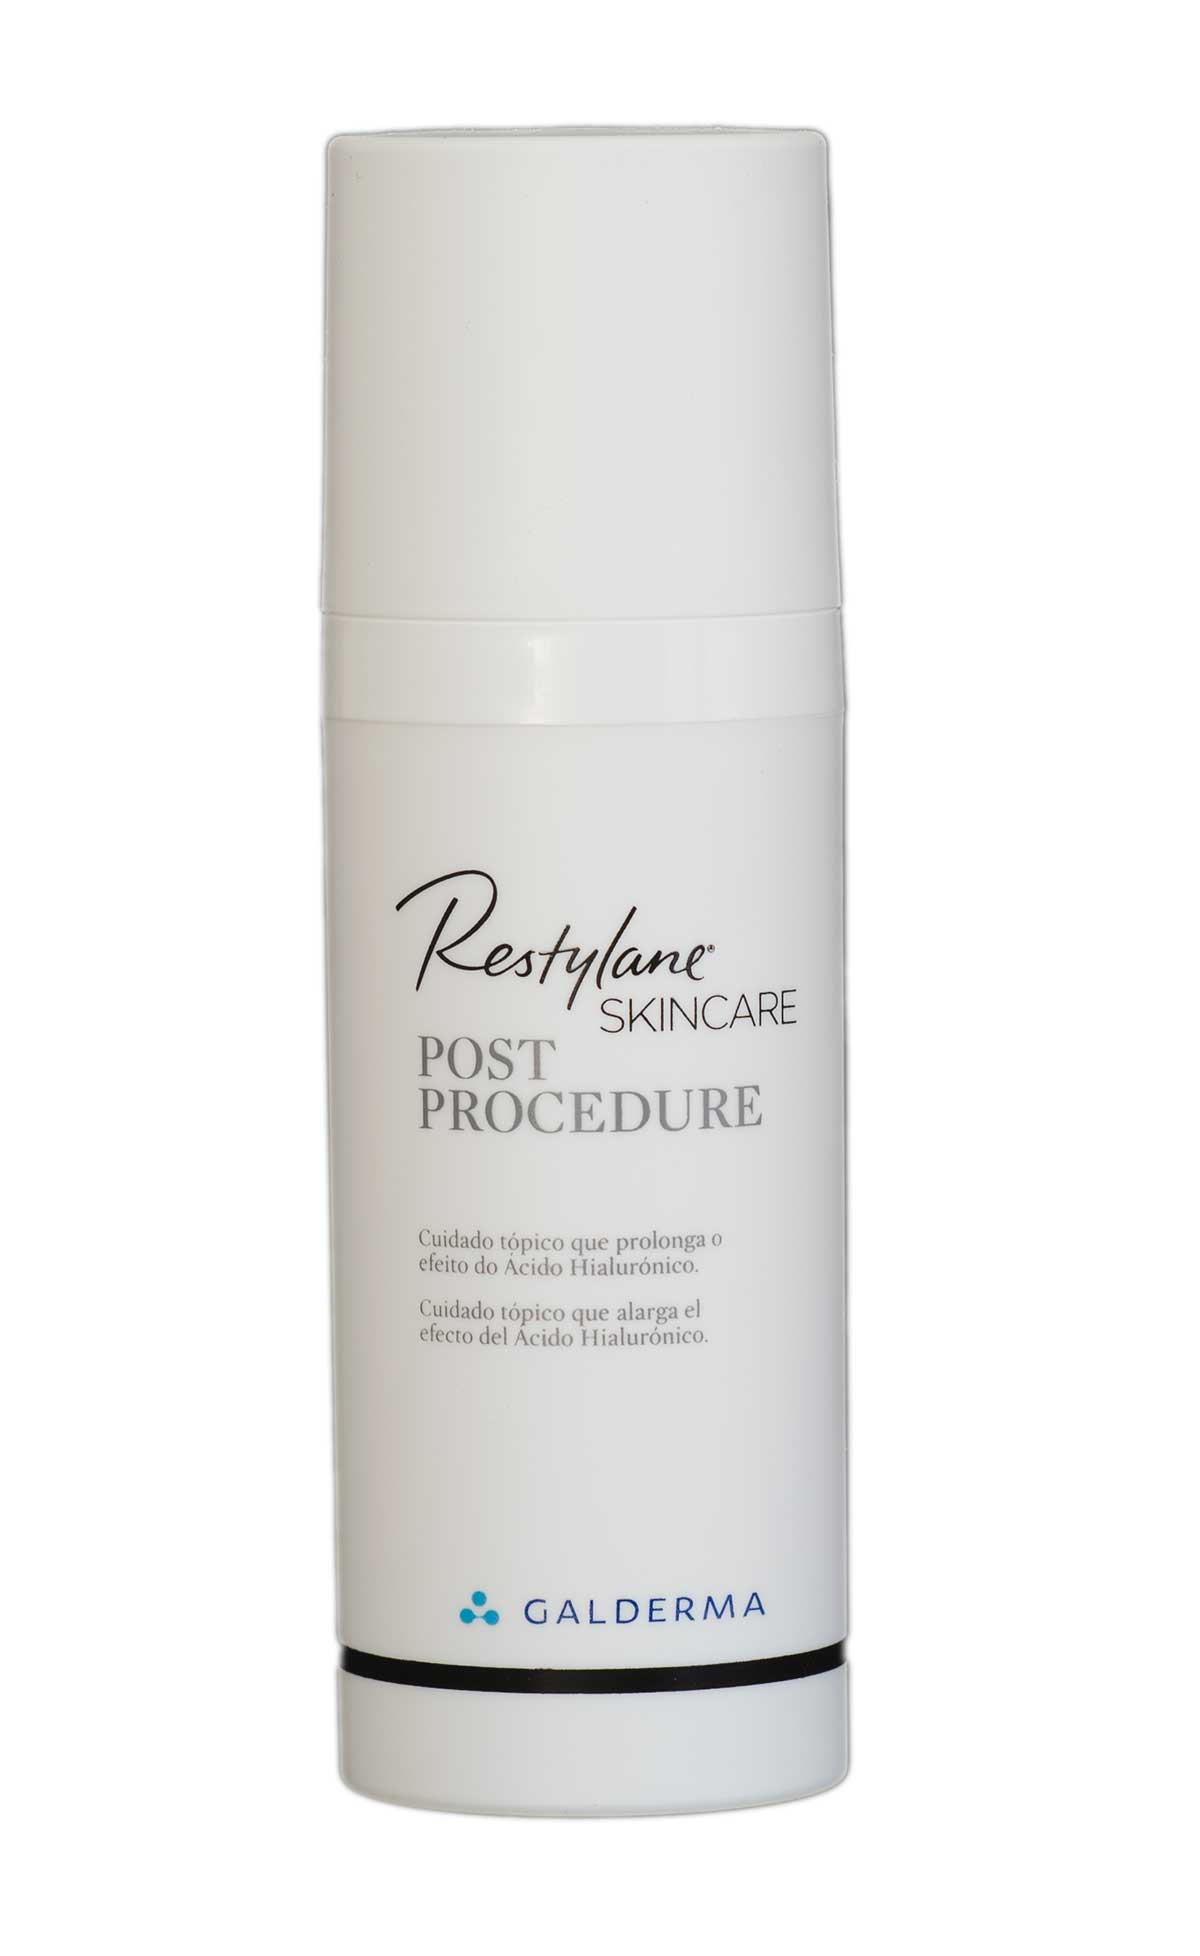 Restylane-Skincare-Post-Procedure-de-GALDERMA